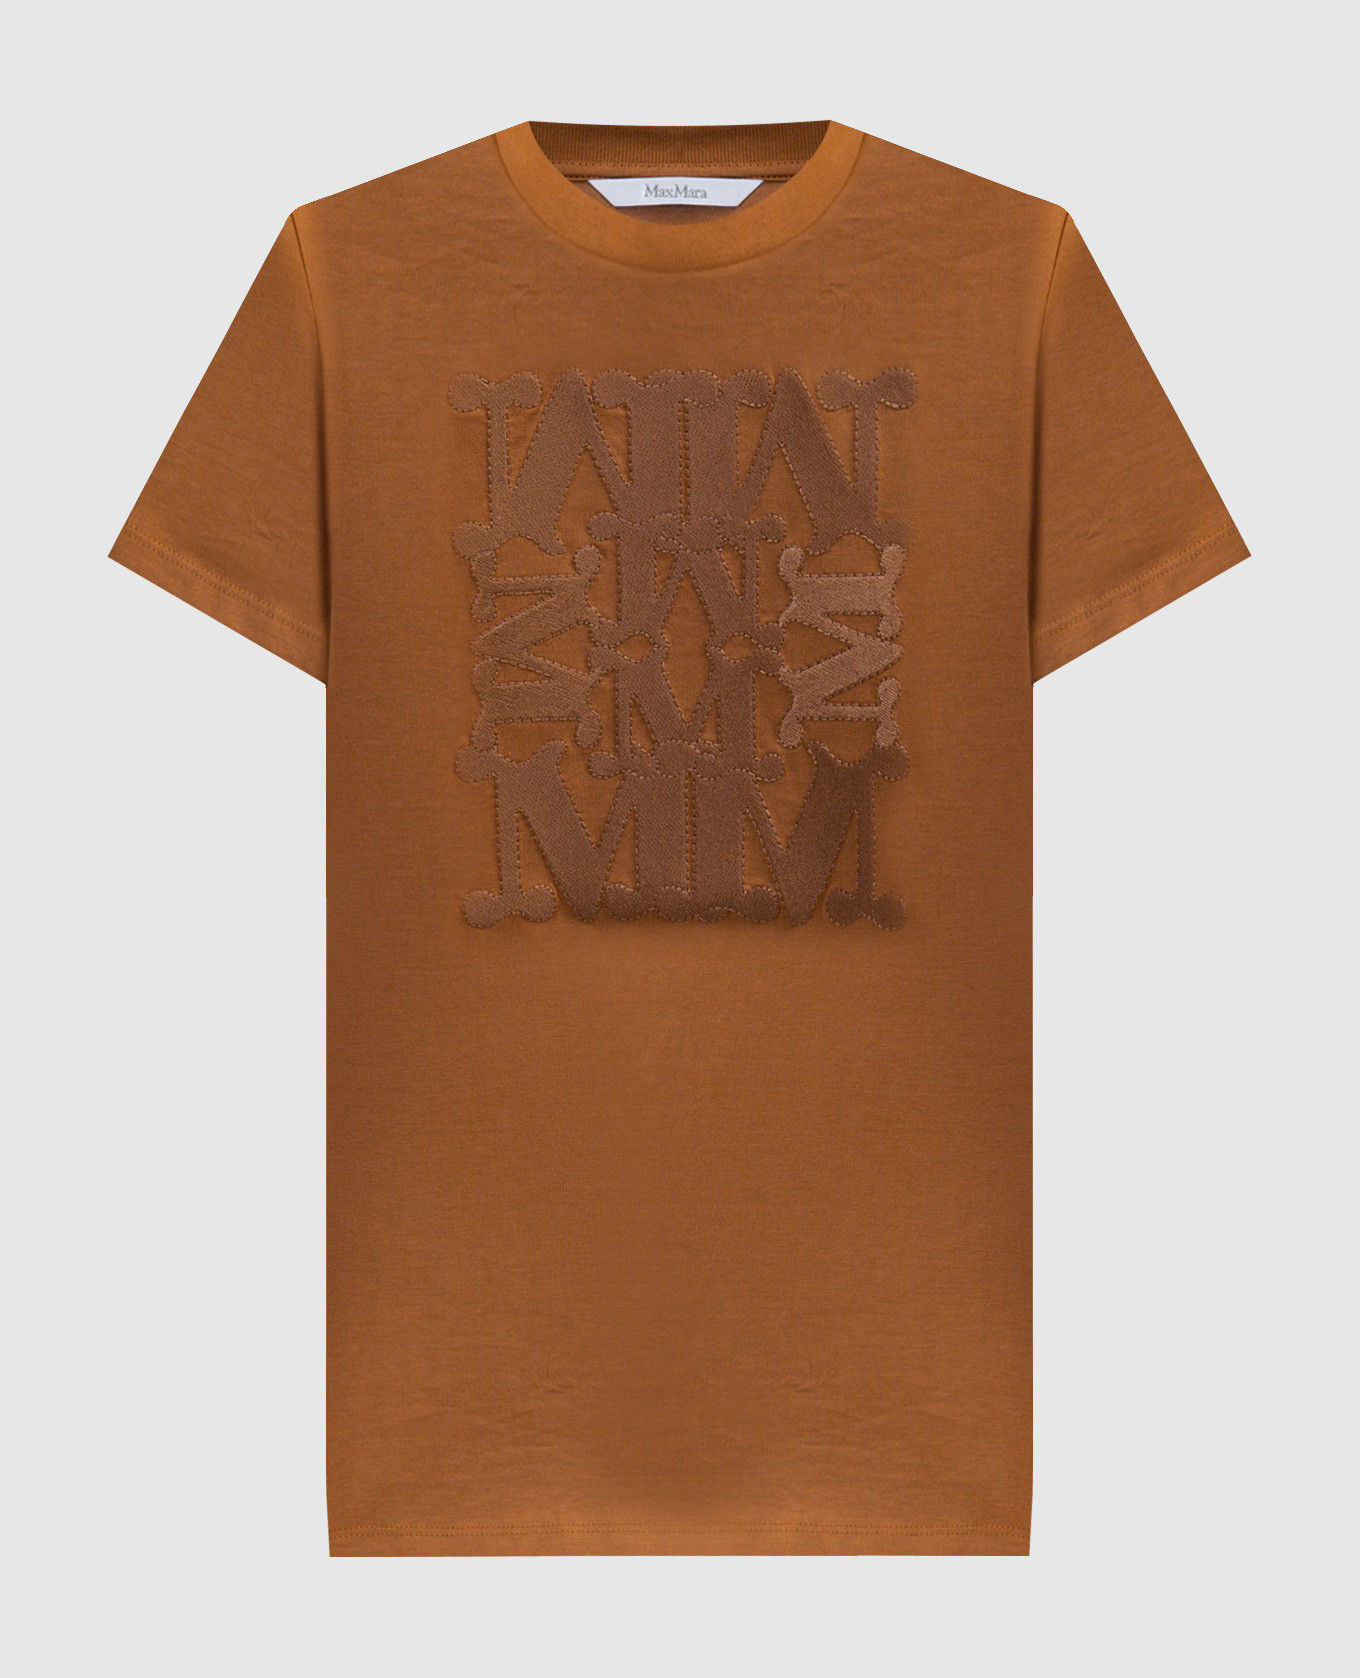 TAVERNA brown t-shirt with logo monogram appliqué